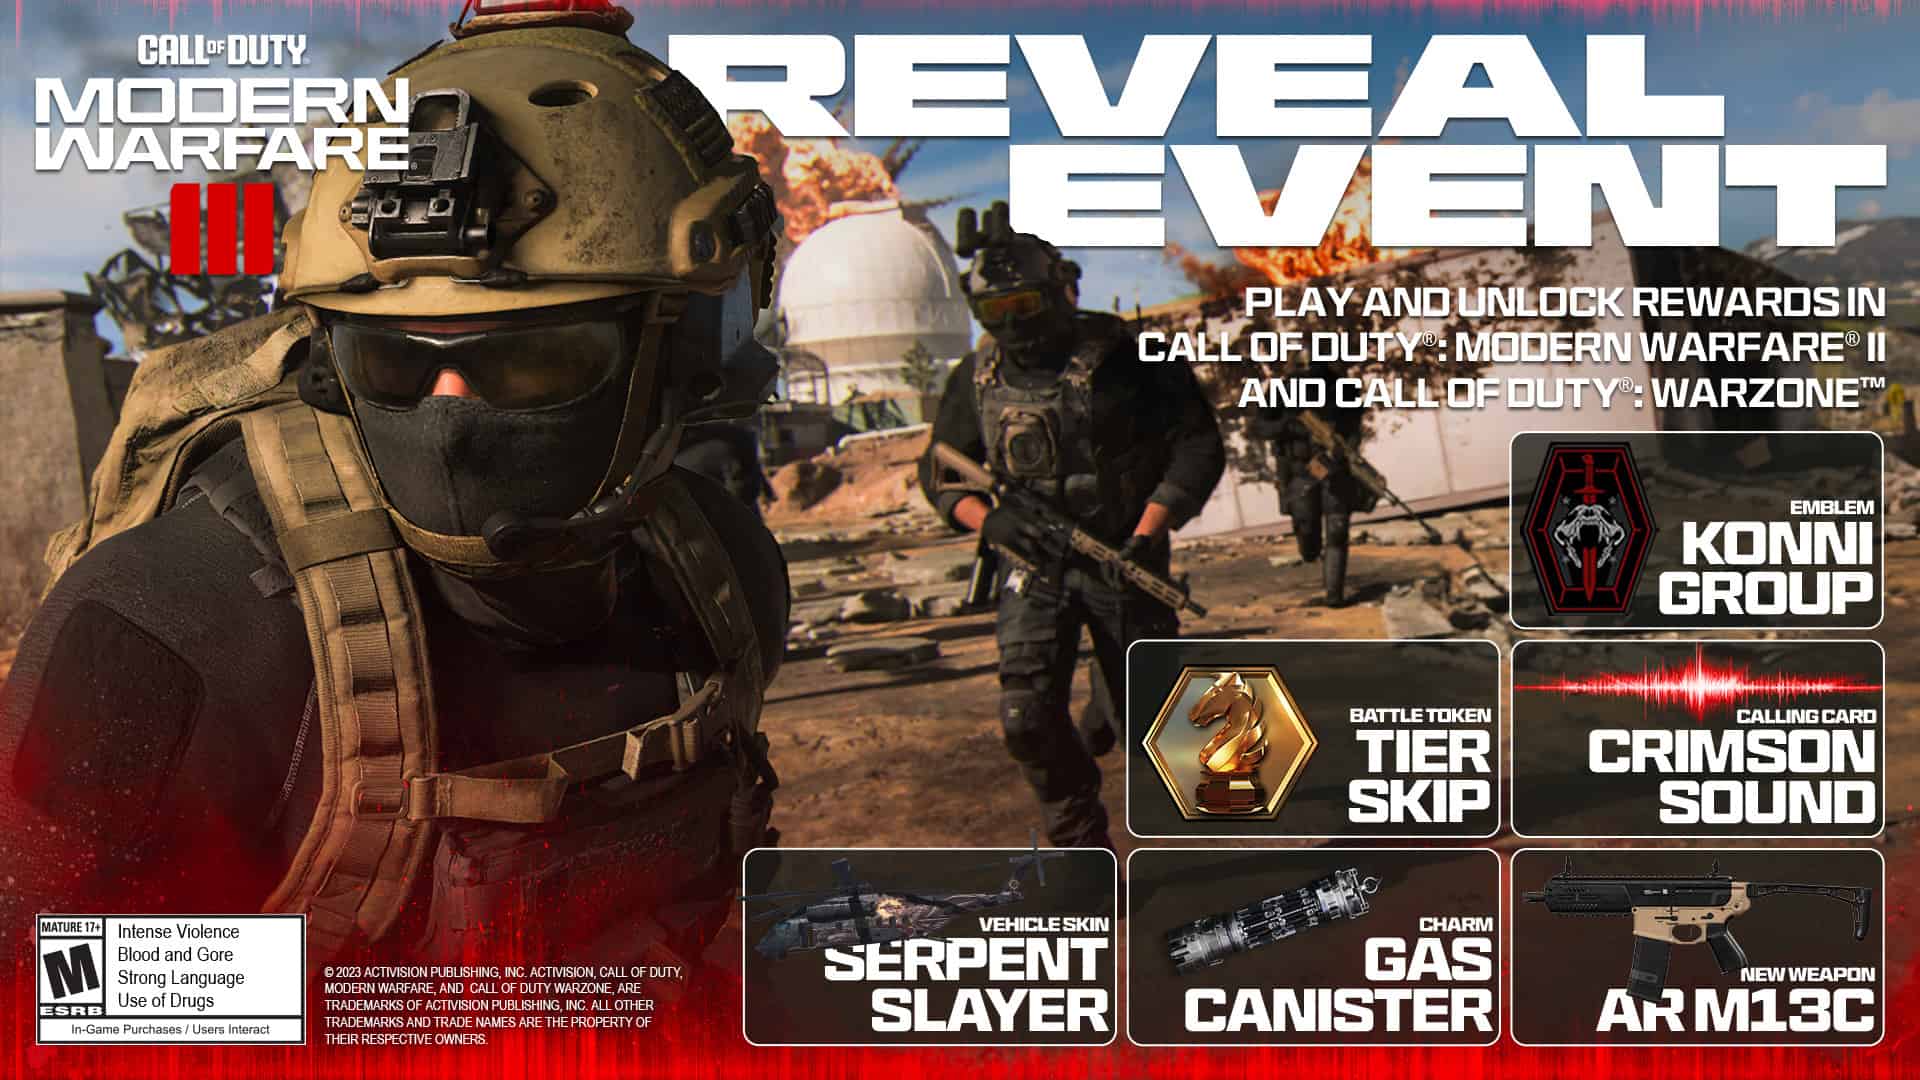 Call of Duty Modern Warfare reveal event rewards list.